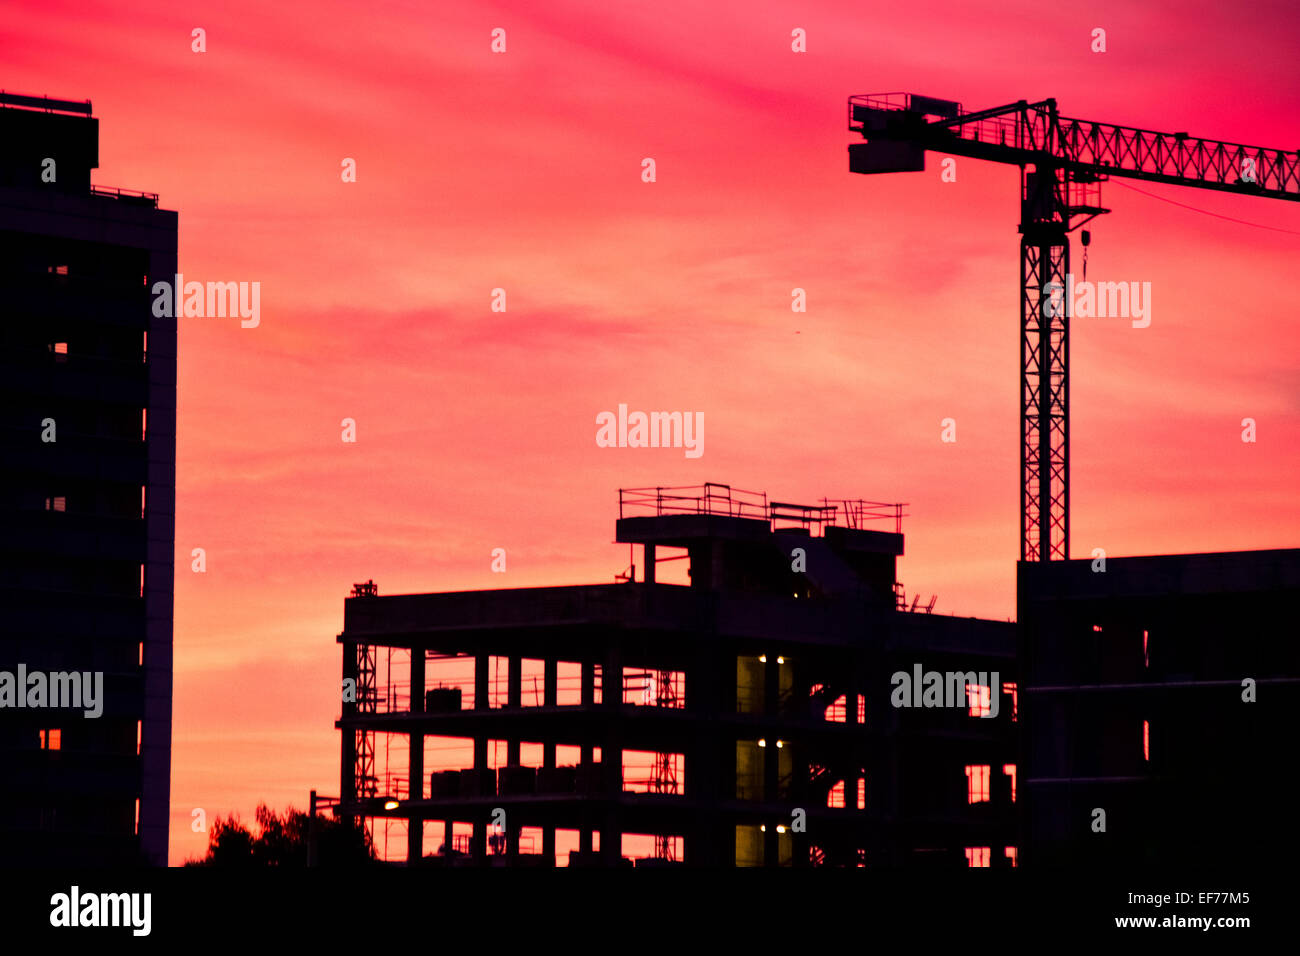 Building under construction at dusk. Stock Photo